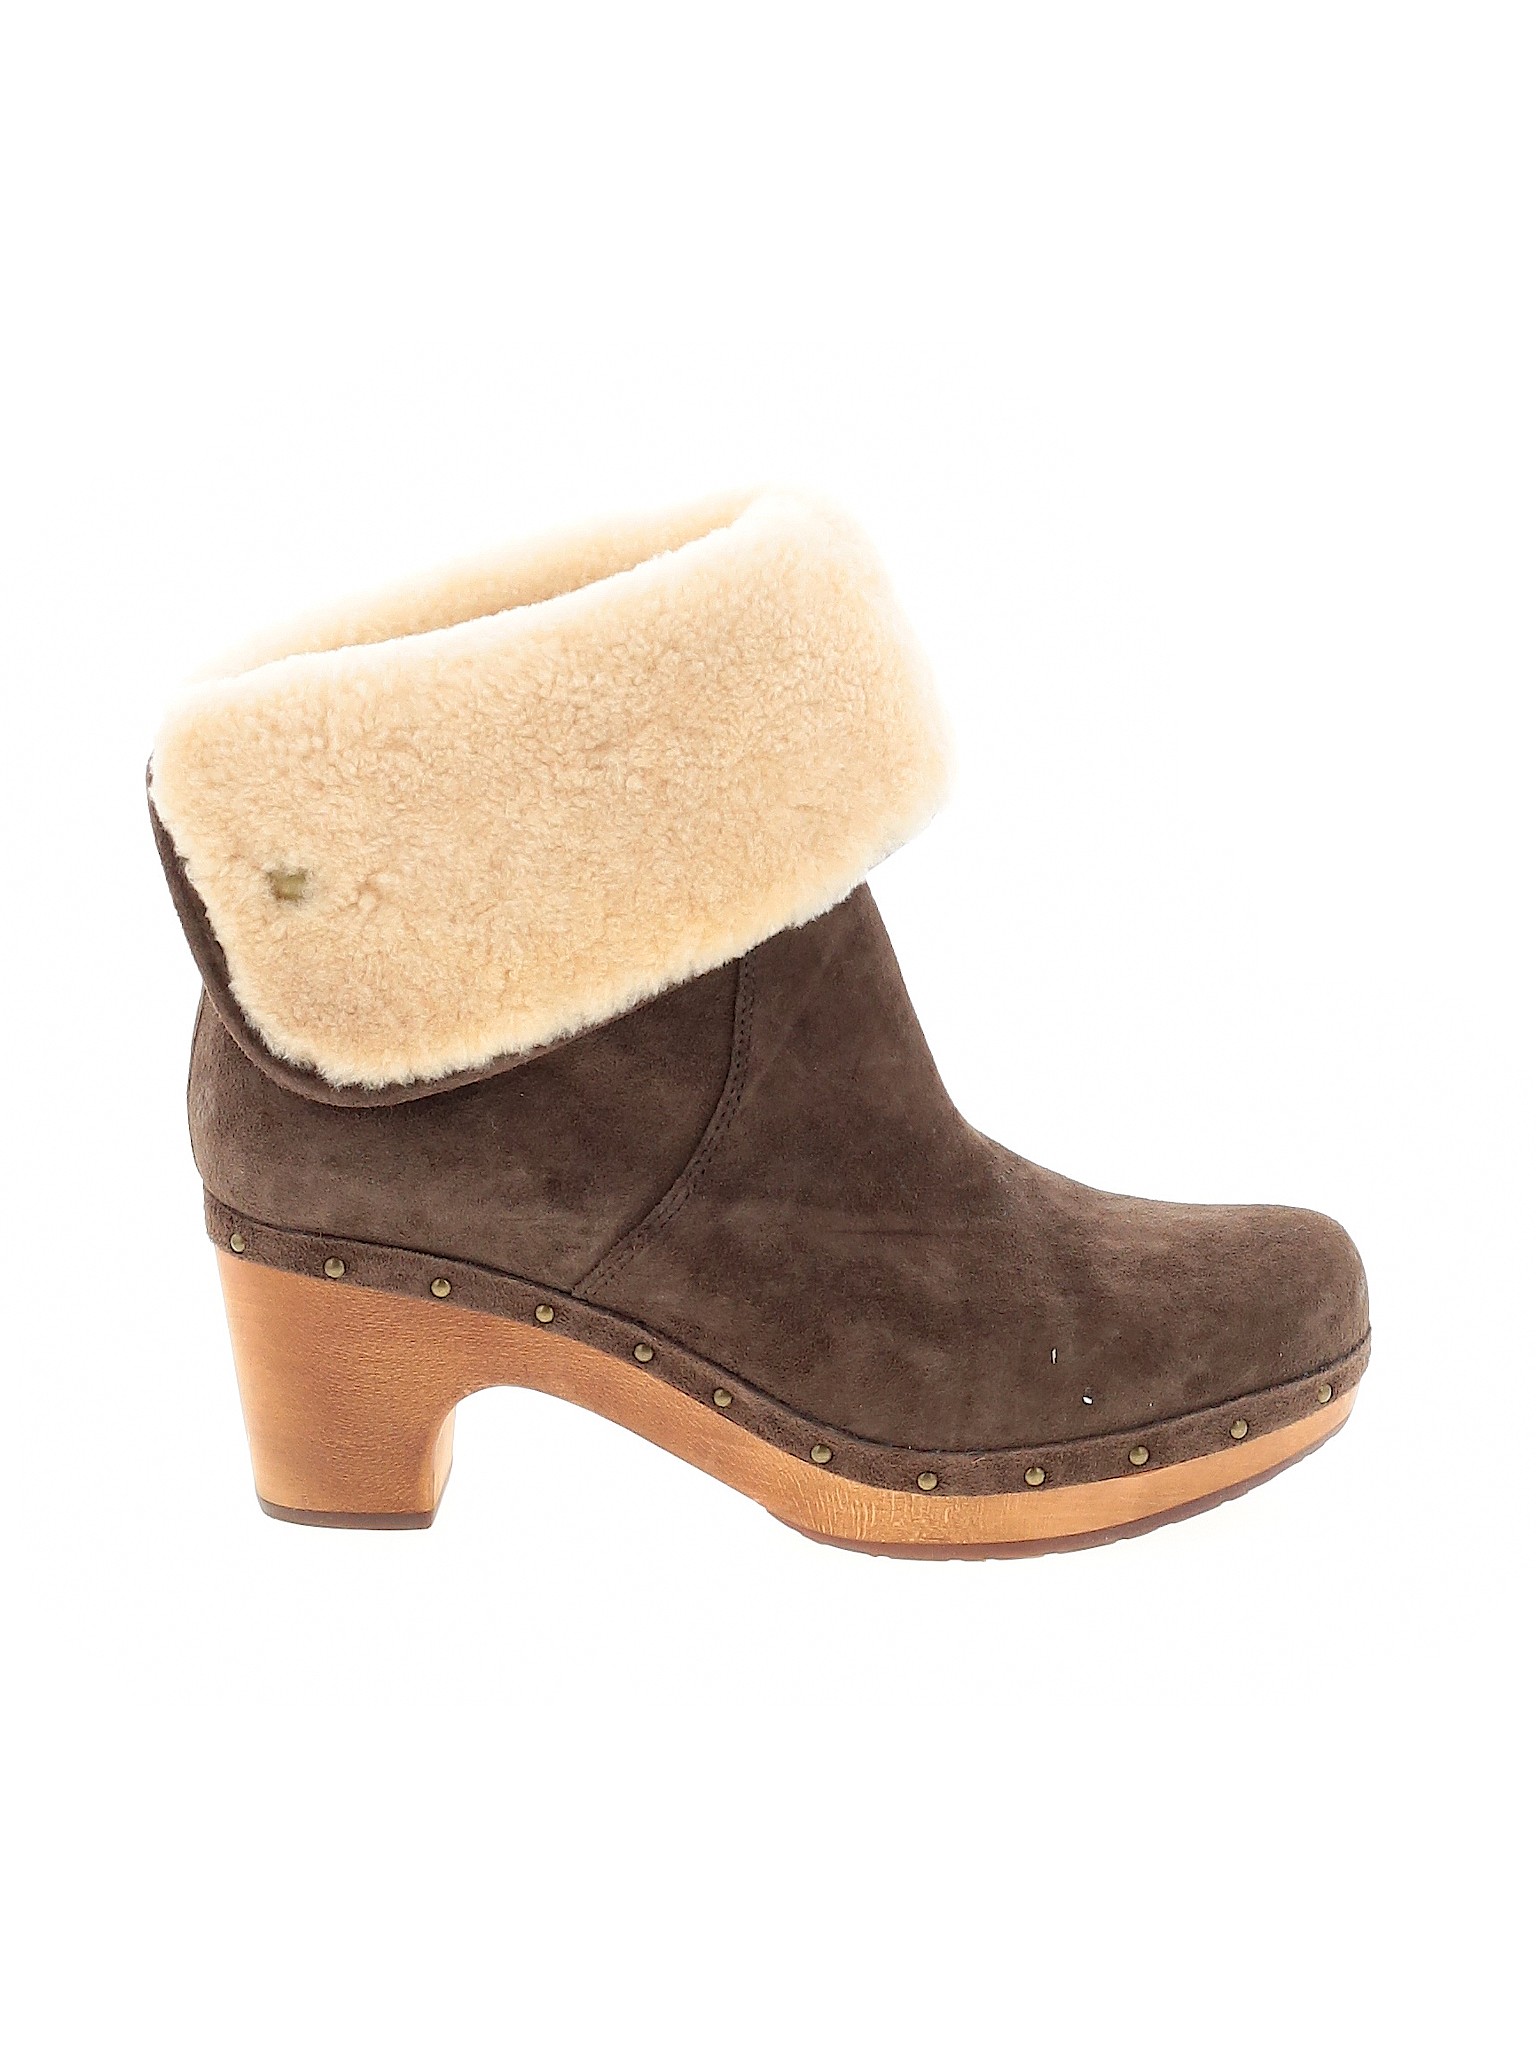 Ugg Australia Women Brown Boots US 9 | eBay